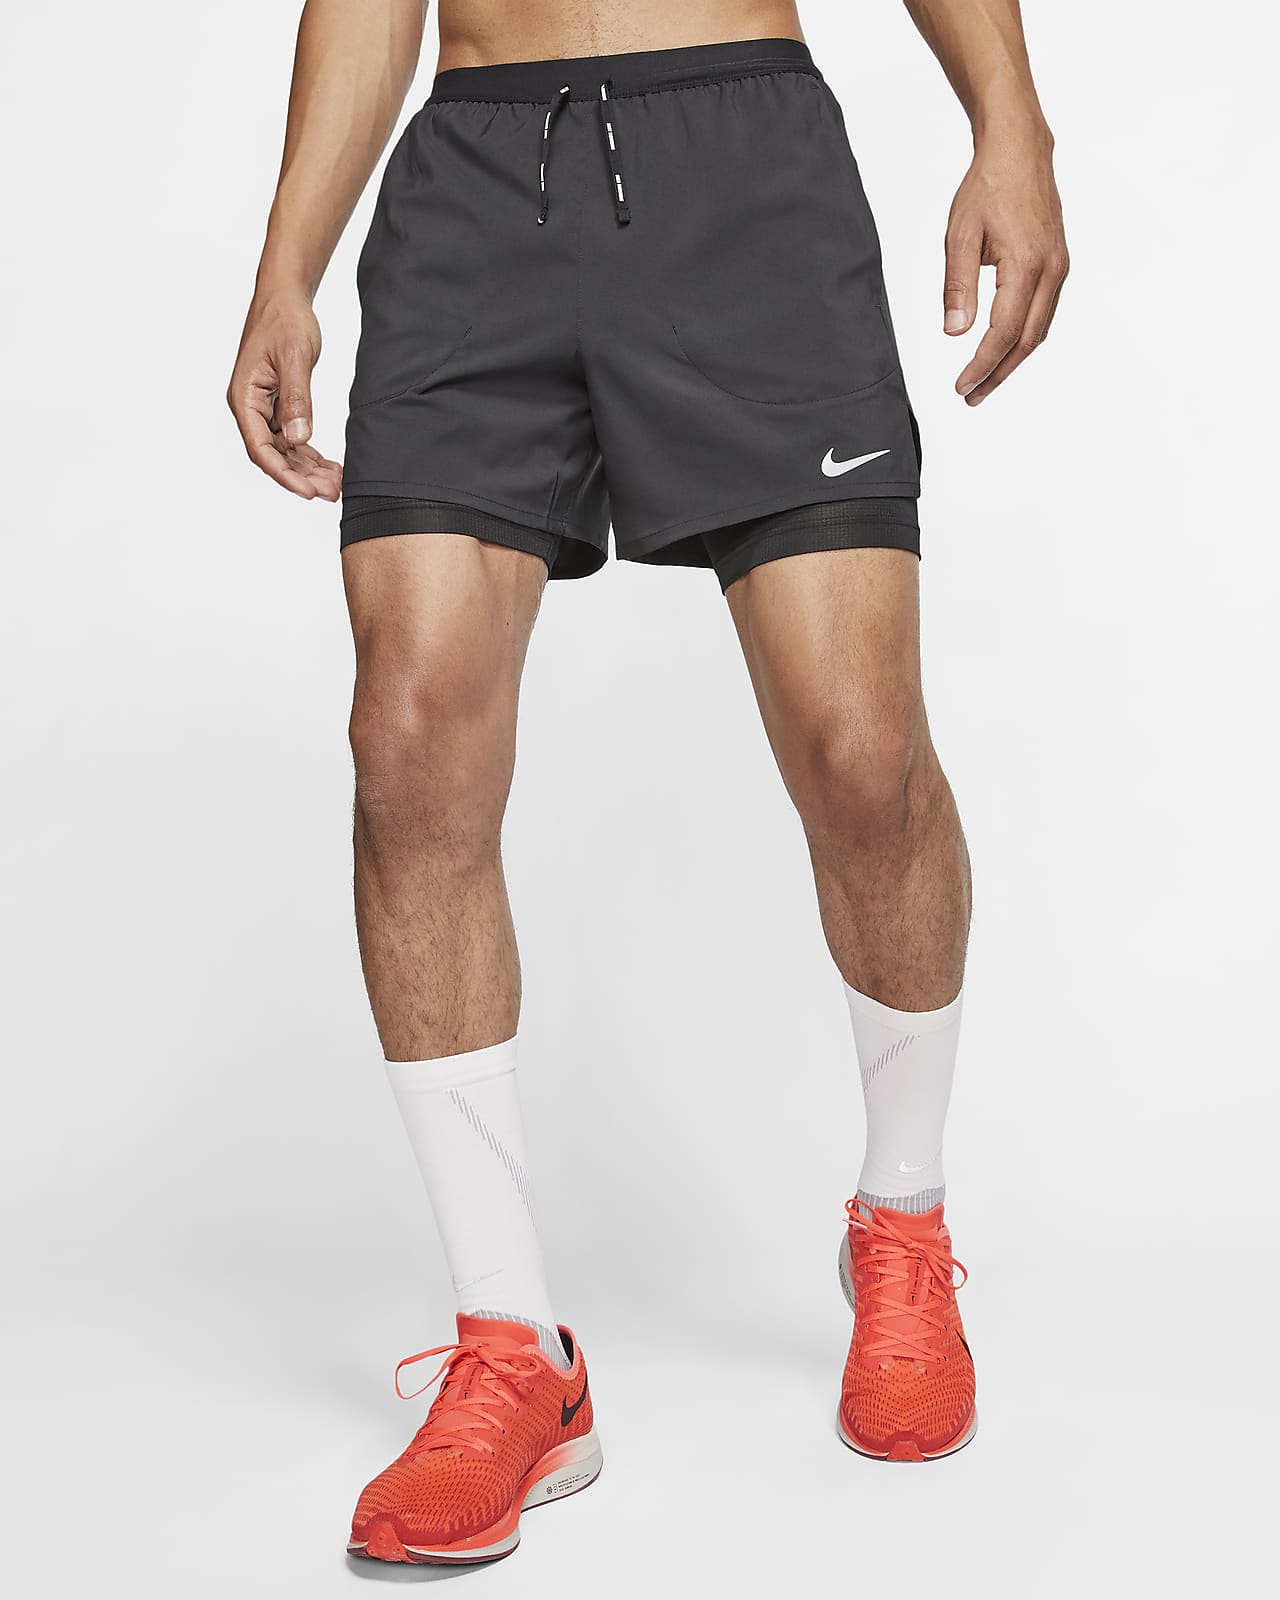 Shorts de running 2 en 1 de 13 cm para hombre Nike Flex Stride. Nike MX